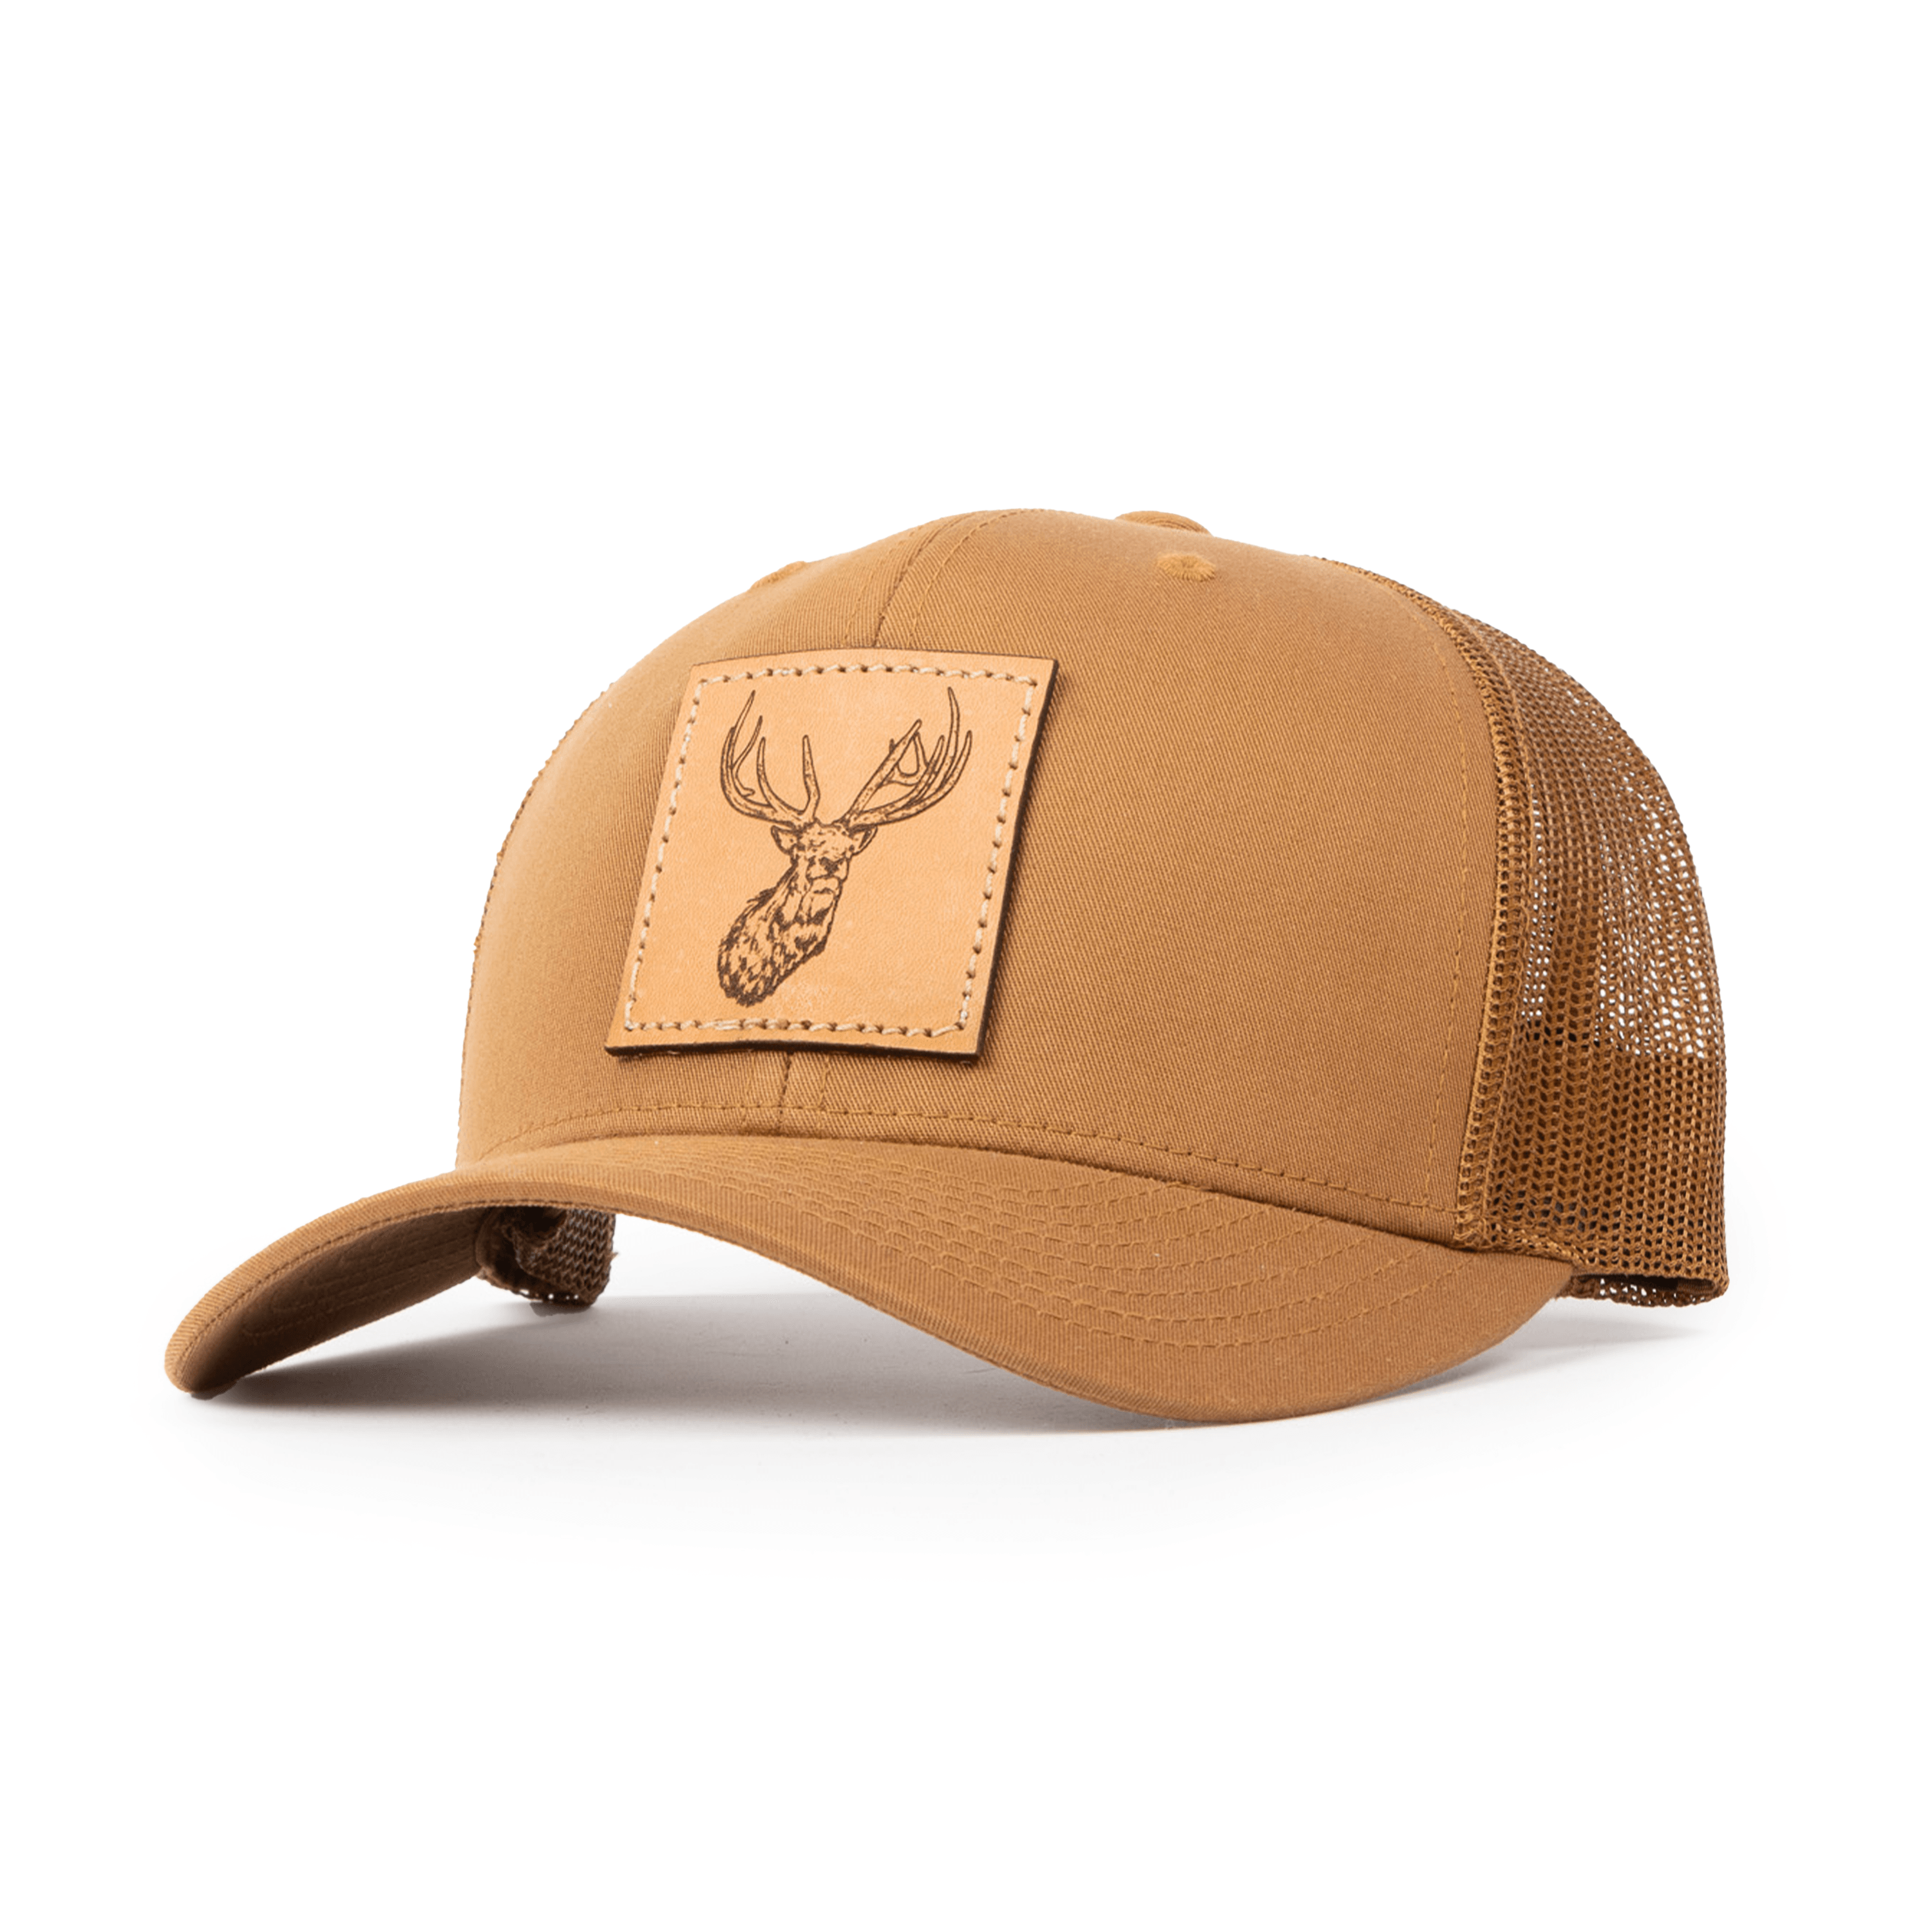 Elk Leather Patch FlexFit Meshback Hat